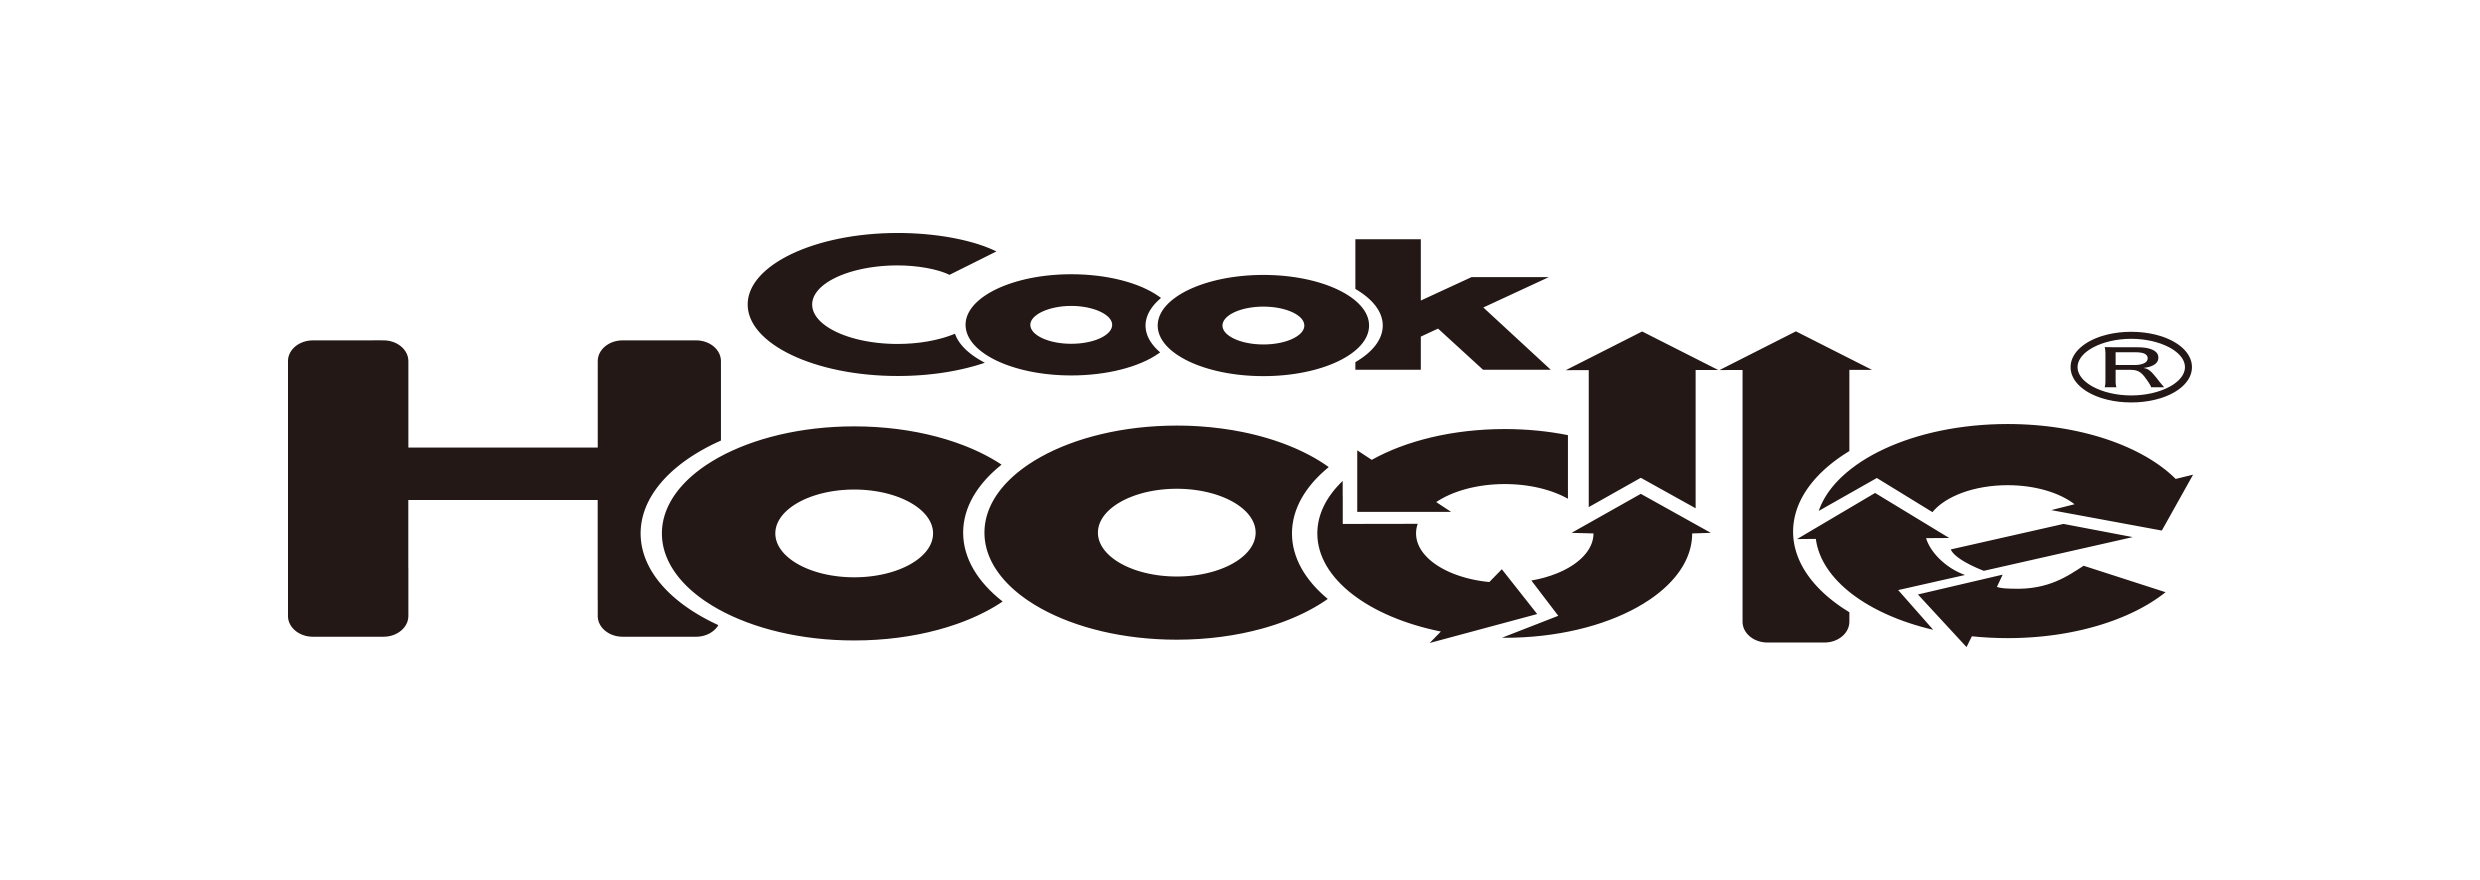 cookhoodle